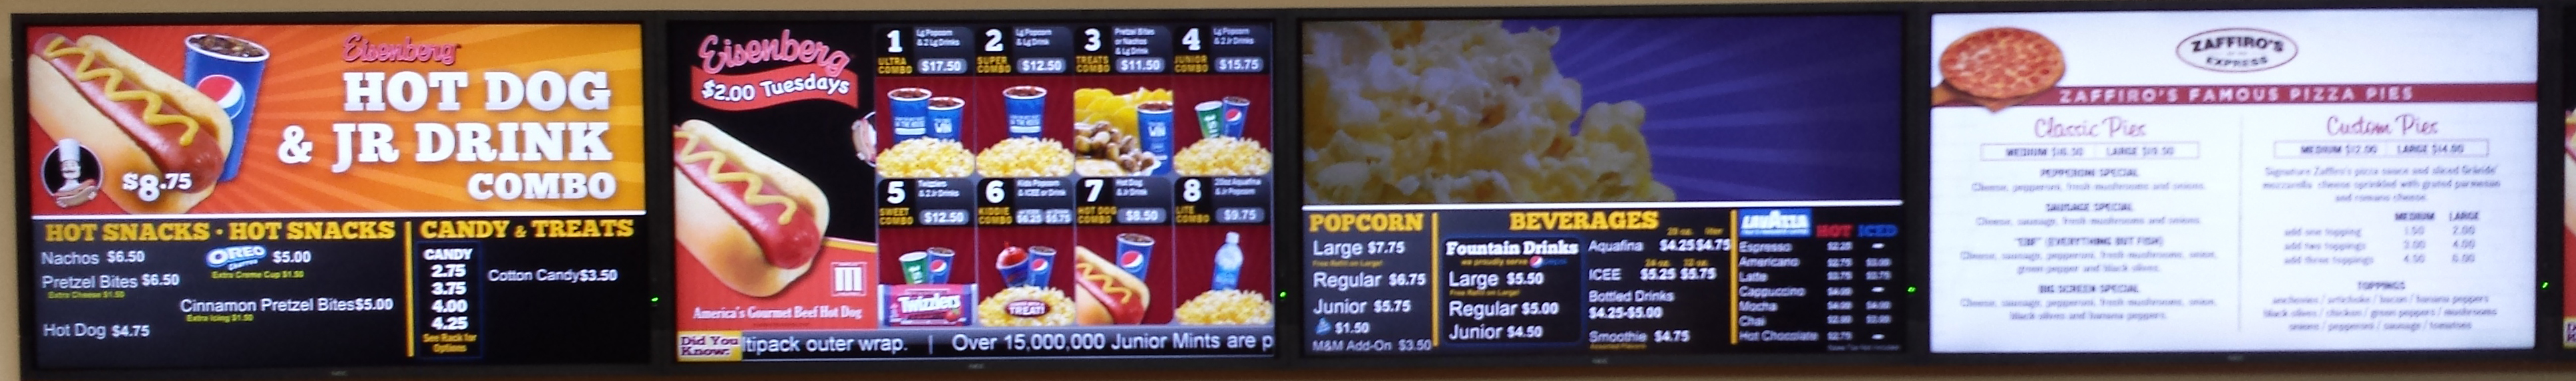 popcorn menu